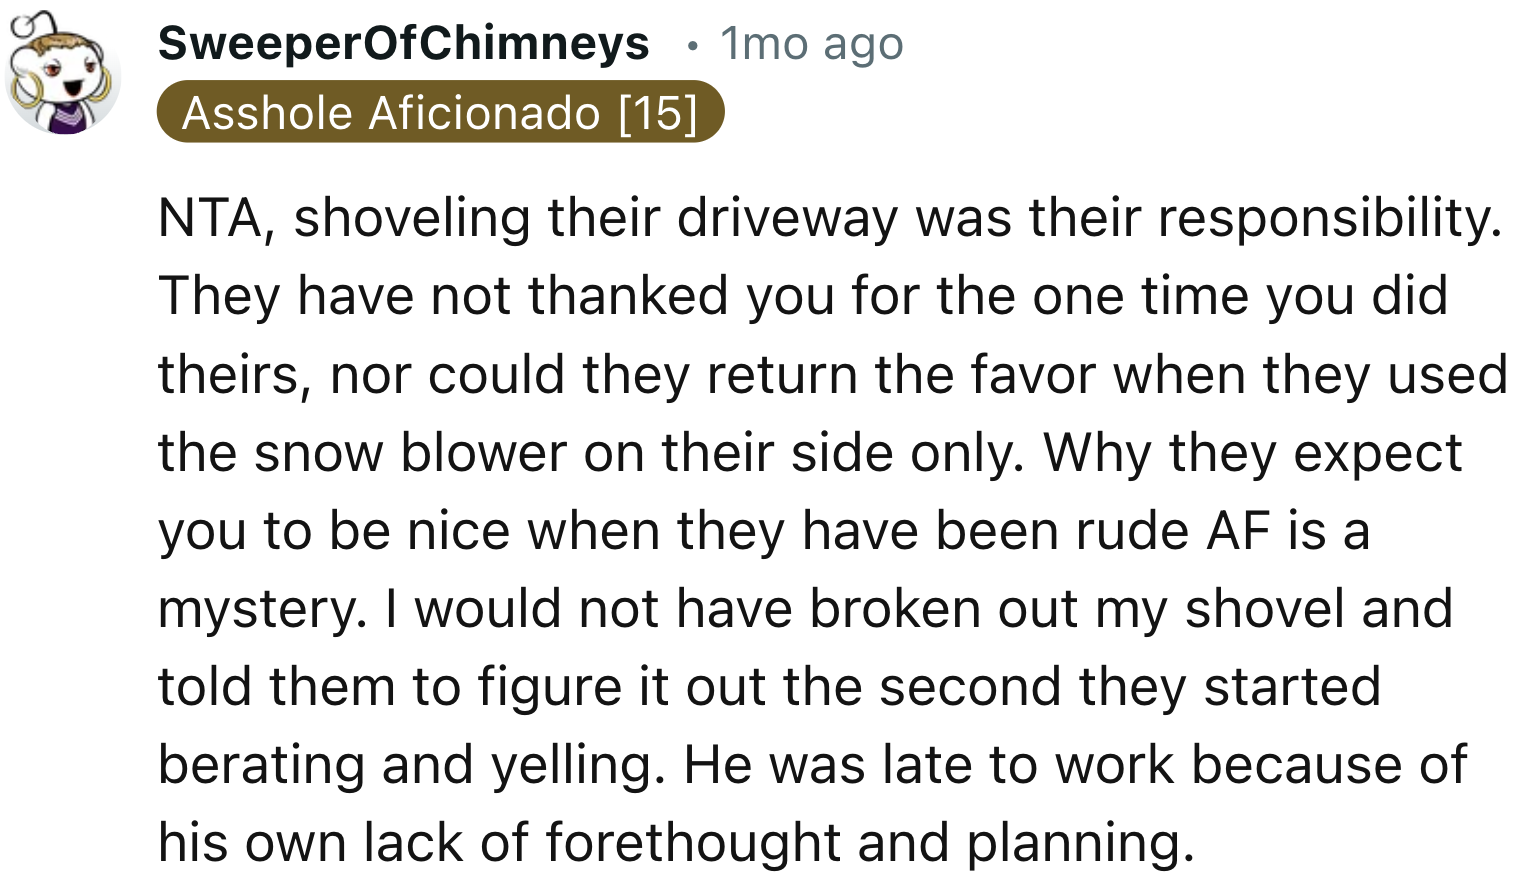 Their driveway, their responsibility